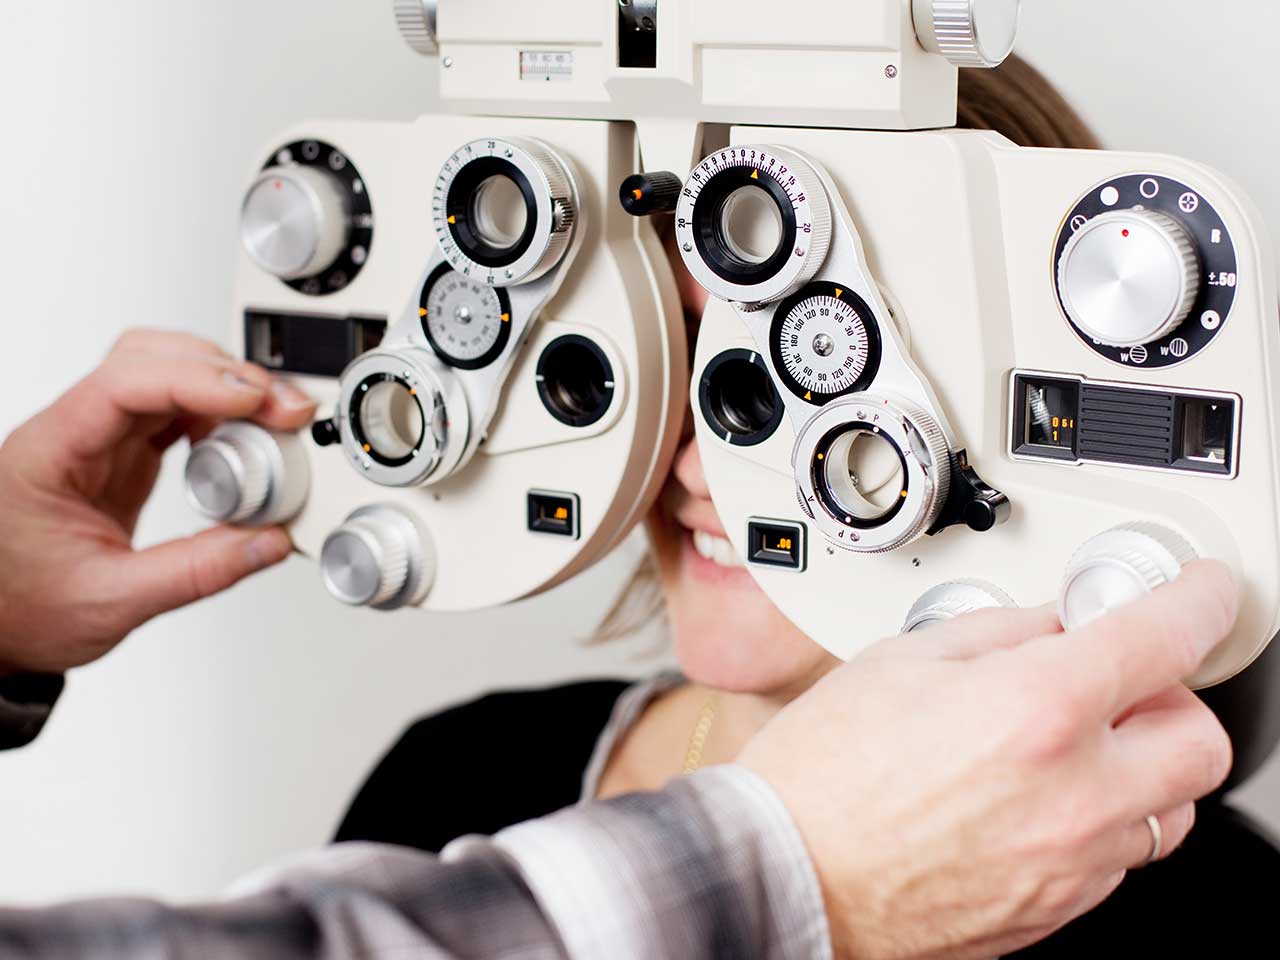 Optometrist in Gold Coast